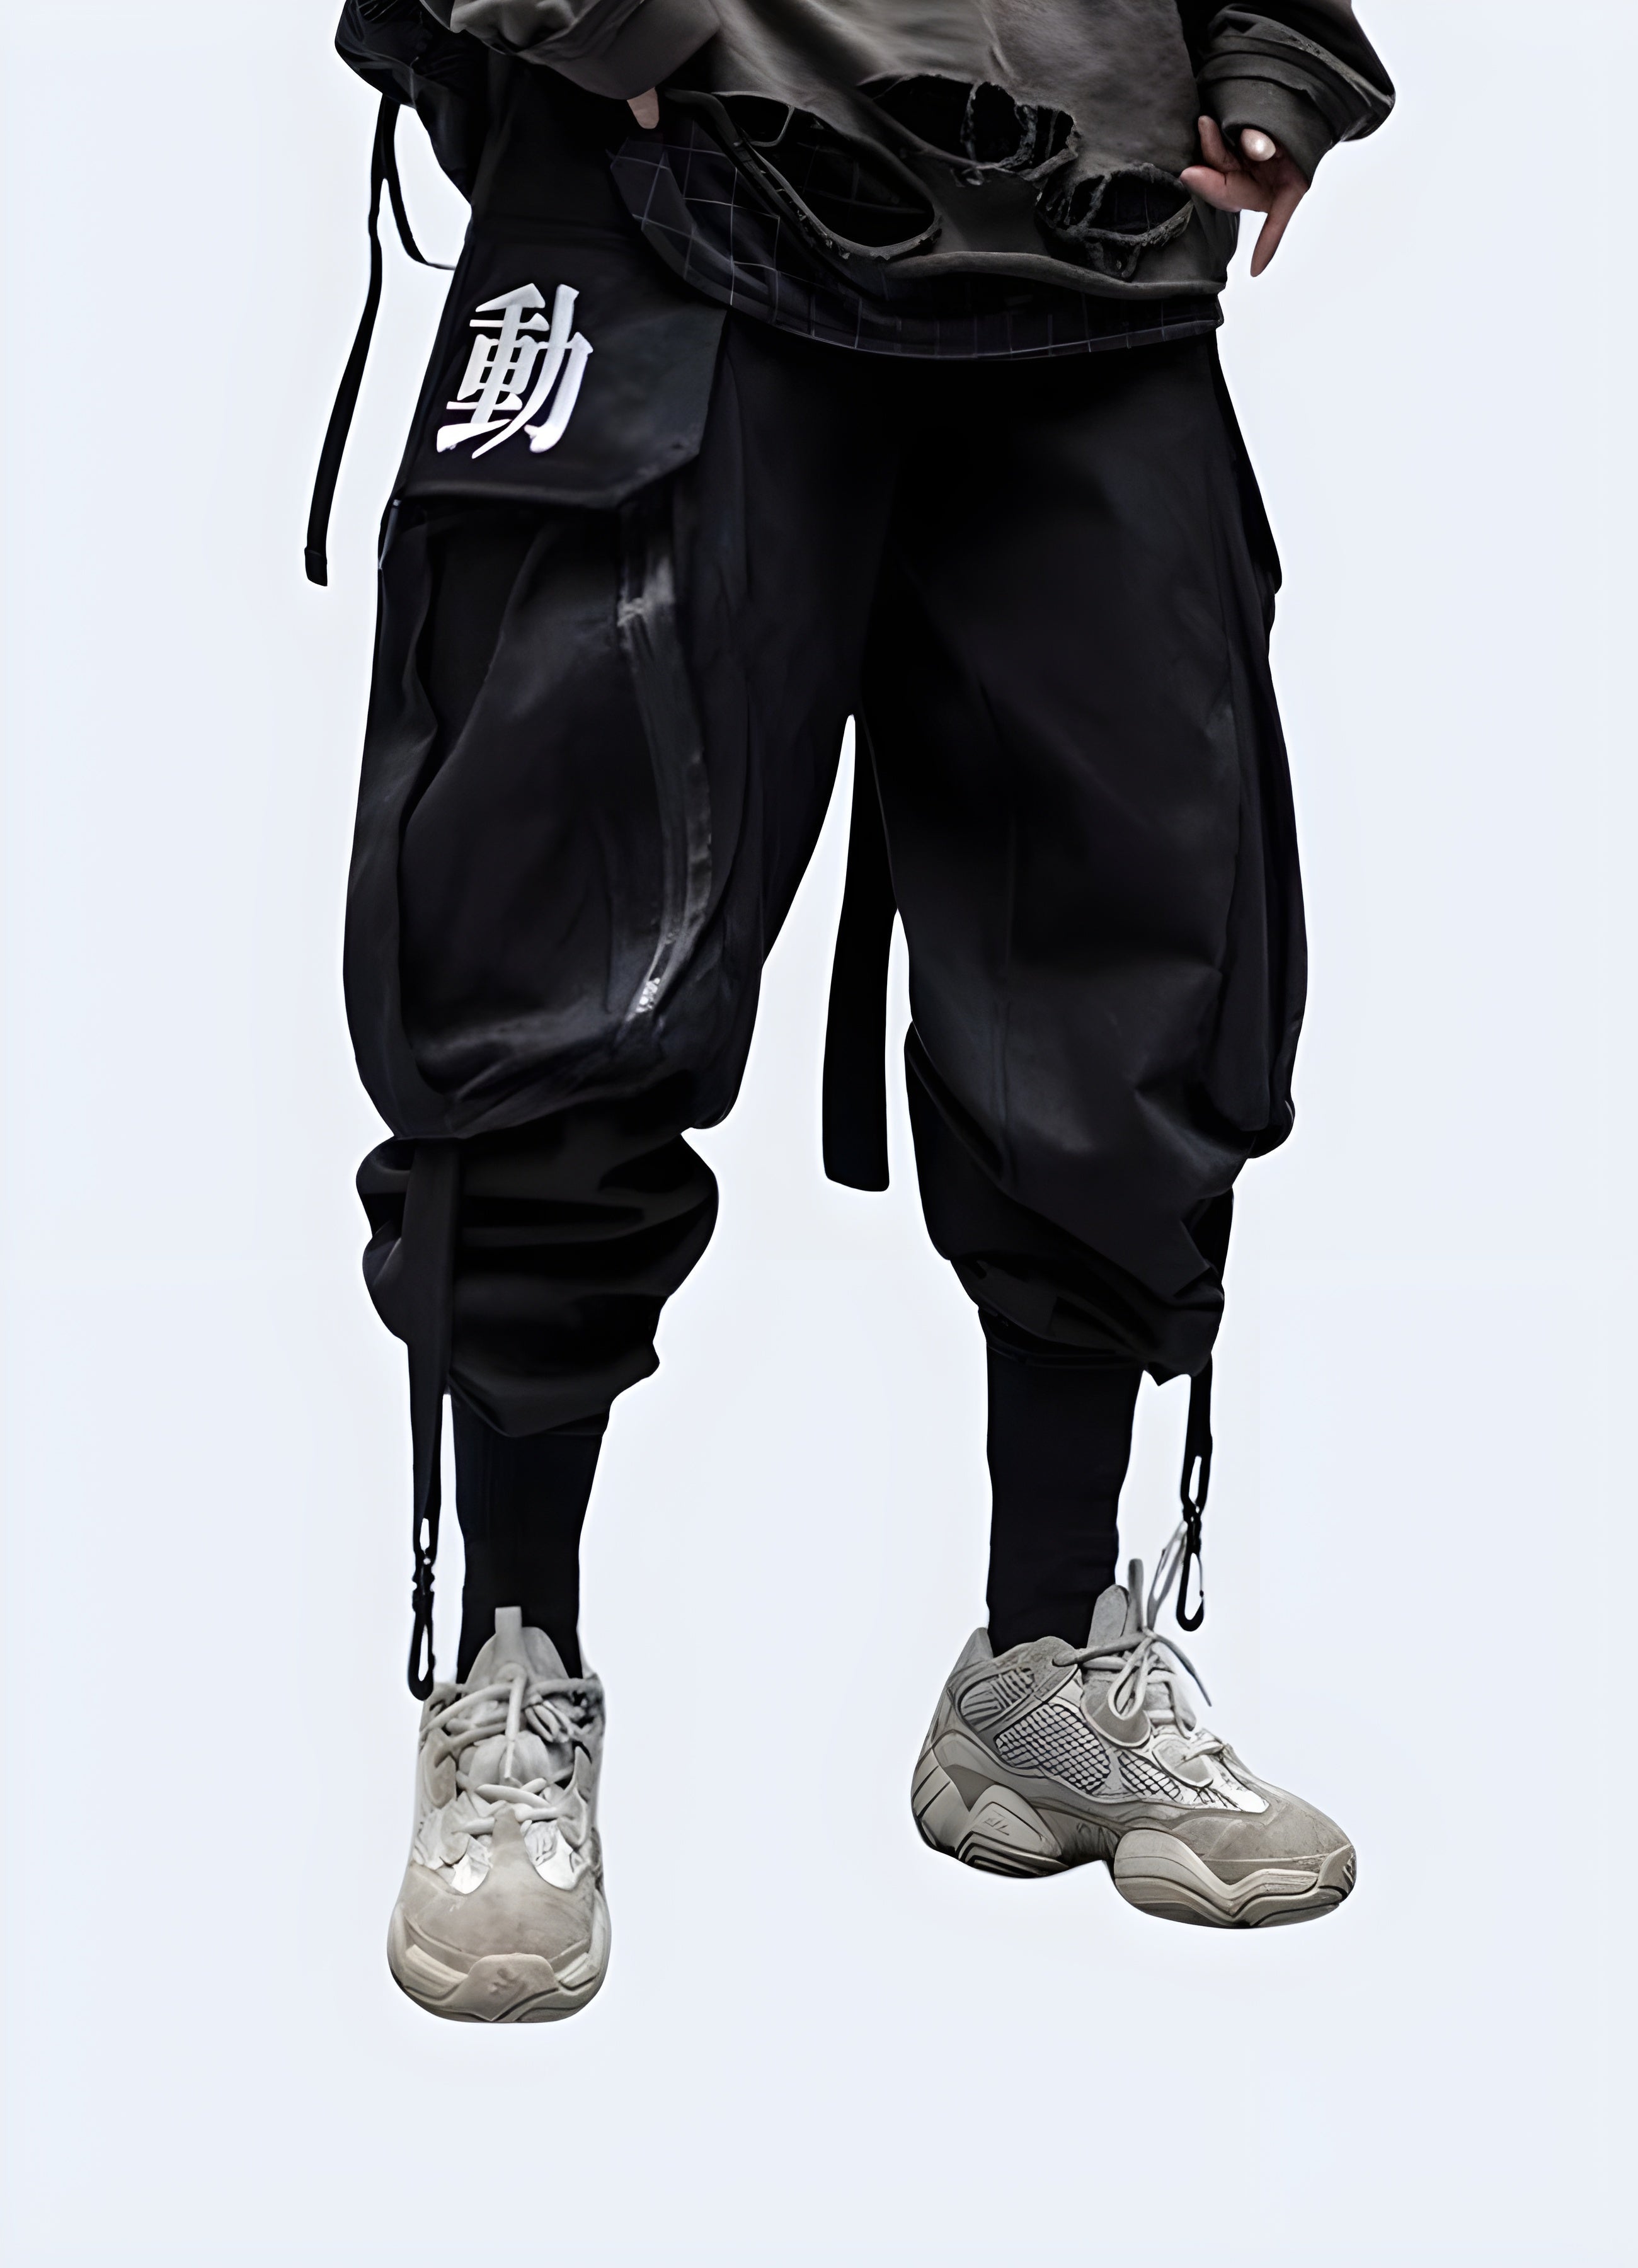 Ninja-inspired shinobi pants with secure pockets.